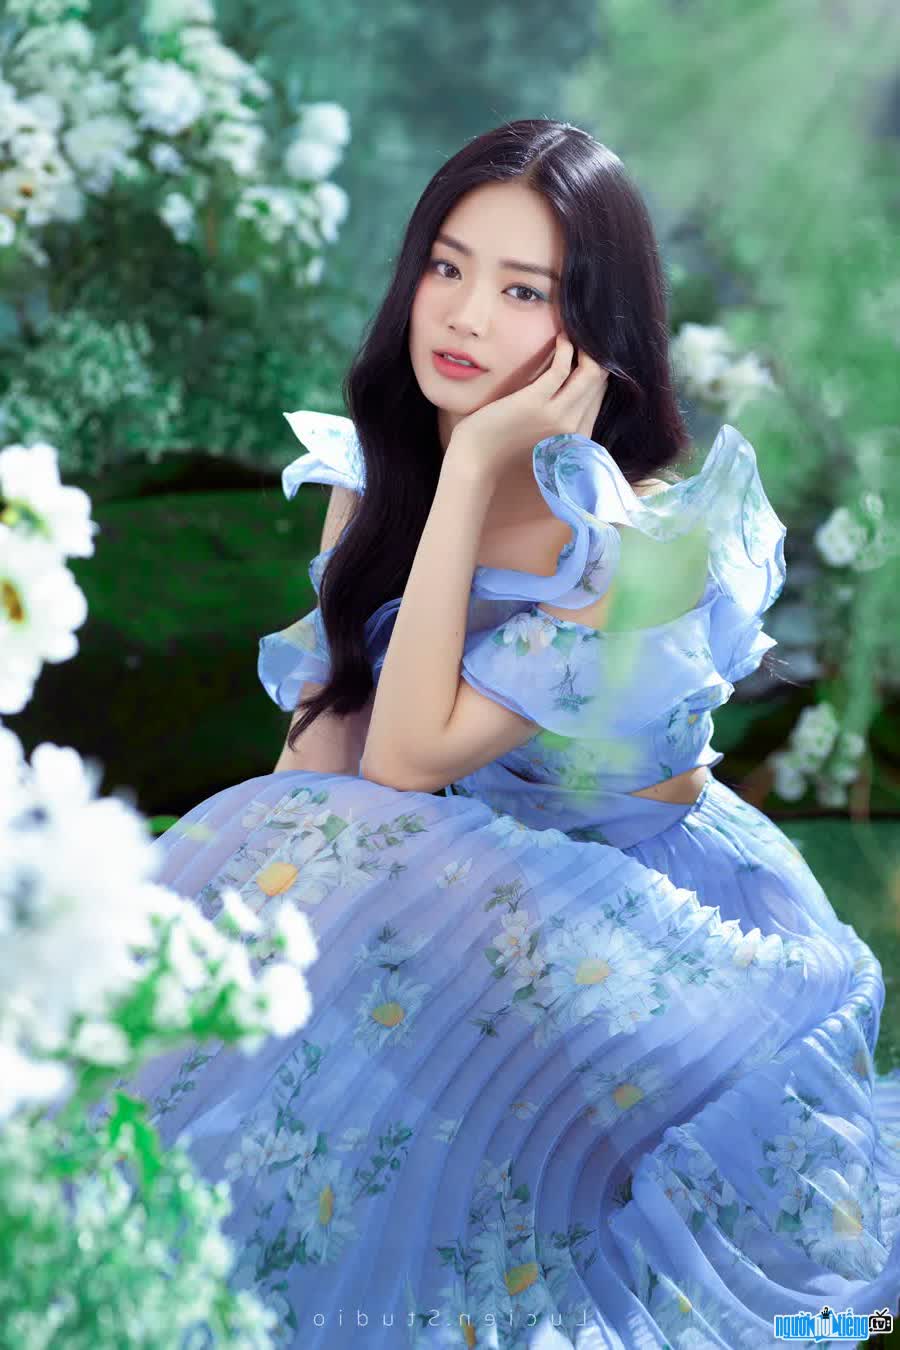 New image of beautiful Bui Khanh Linh